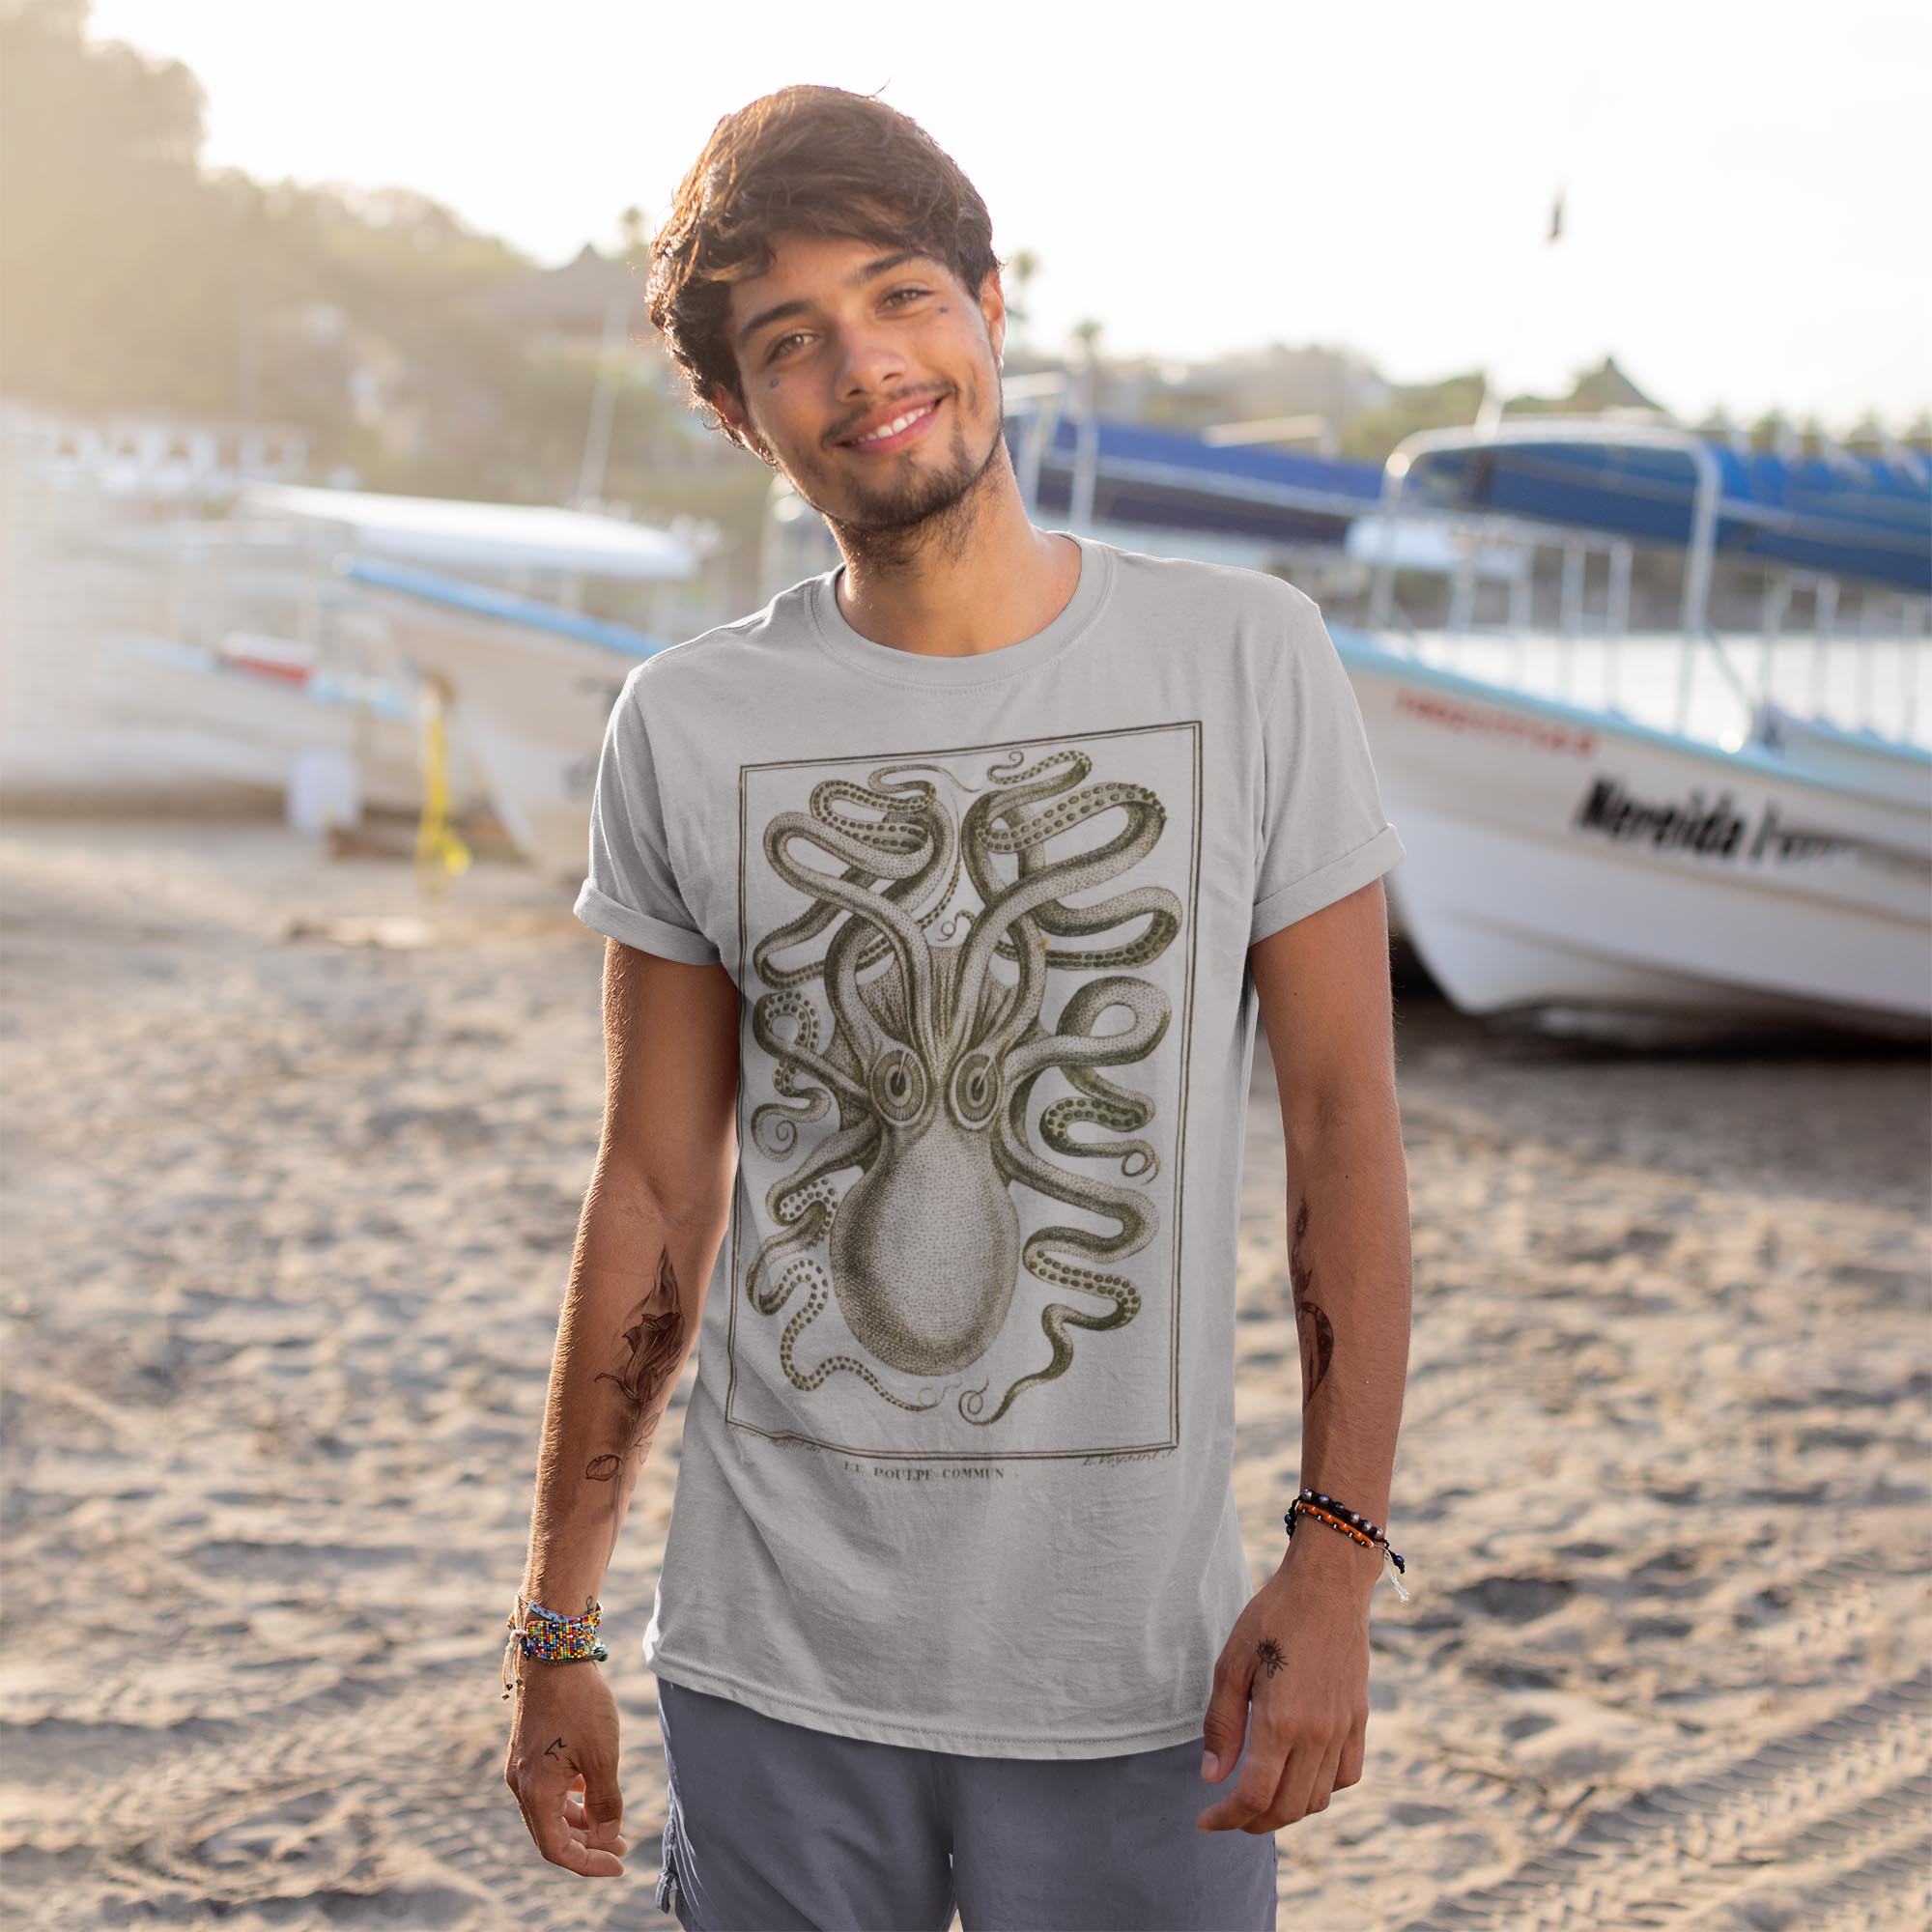 T-Shirts The Kraken, Norse Viking Mythology, Seamonster, Giant Squid, Octopus Vintage Graphic T-Shirt